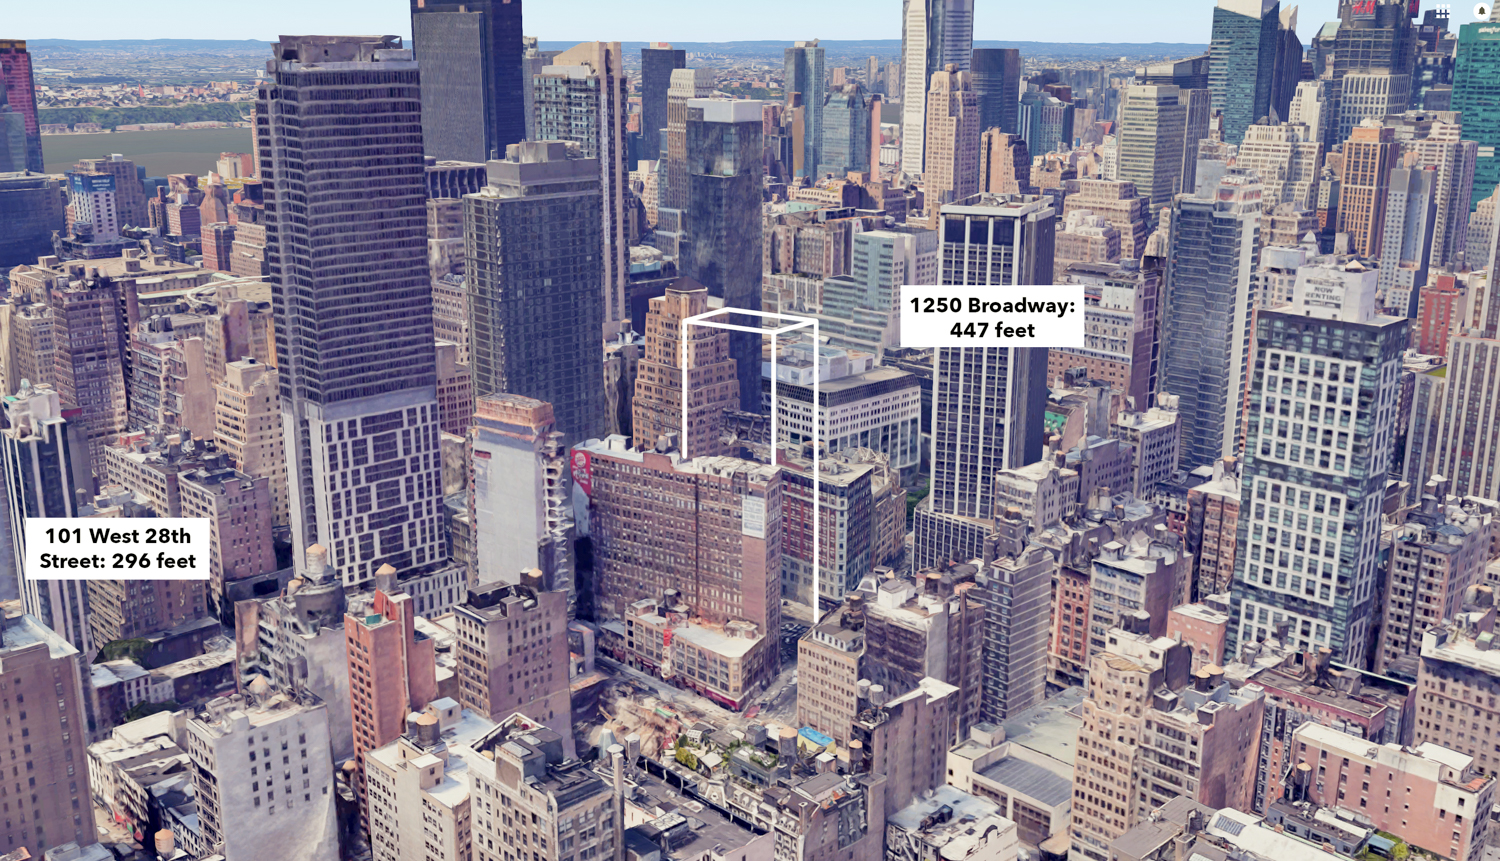 1241 Broadway estimated height, base image via Google Maps